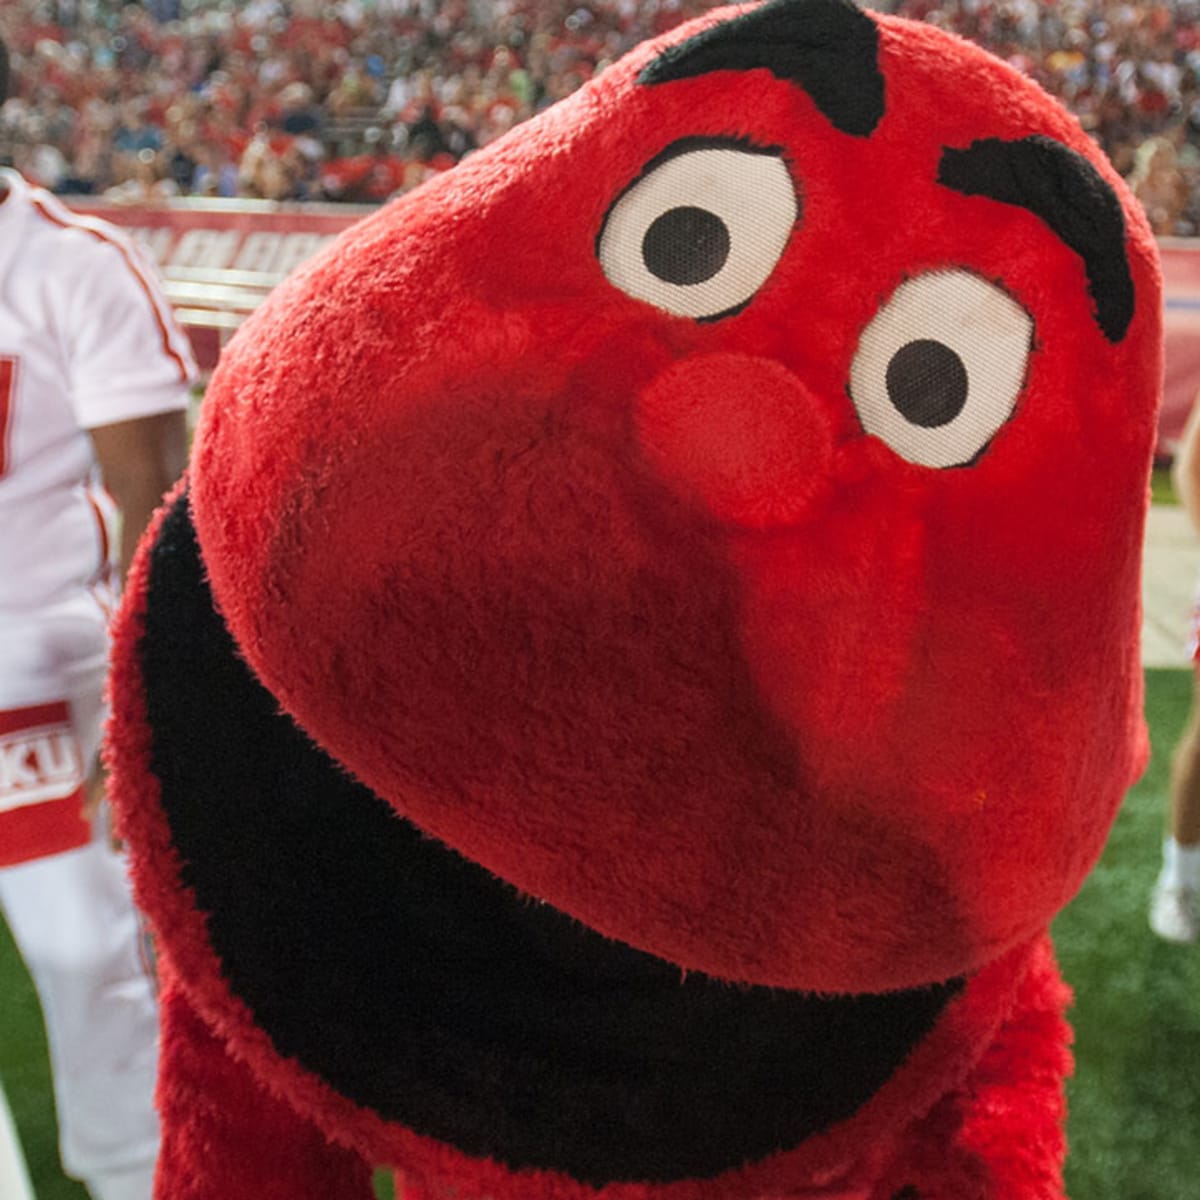 What Is Western Kentucky's Big Red Mascot? - Stadium